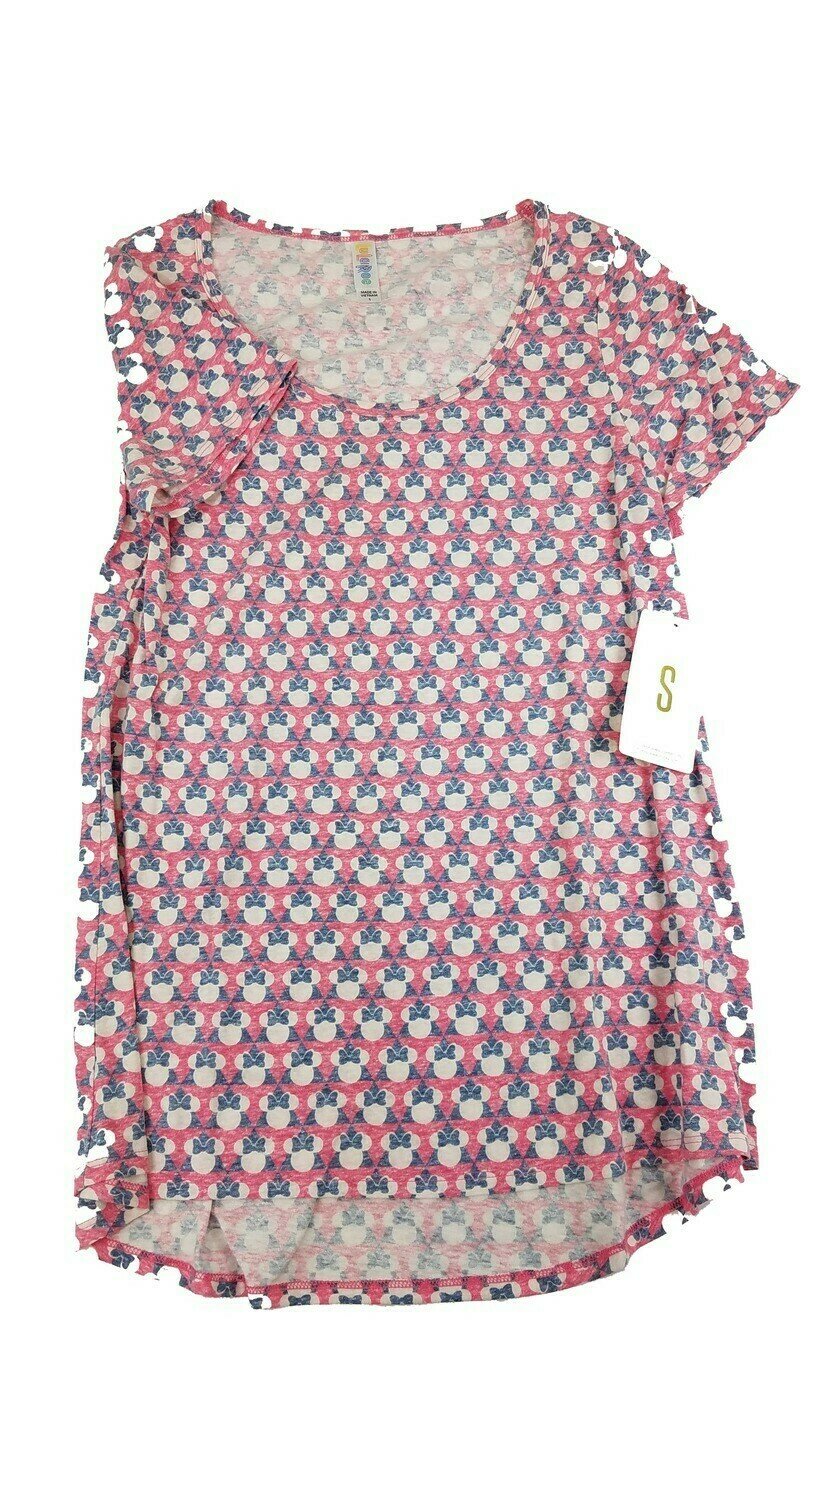 LuLaRoe Classic Tee Small S Womens Shirt fits 6-8